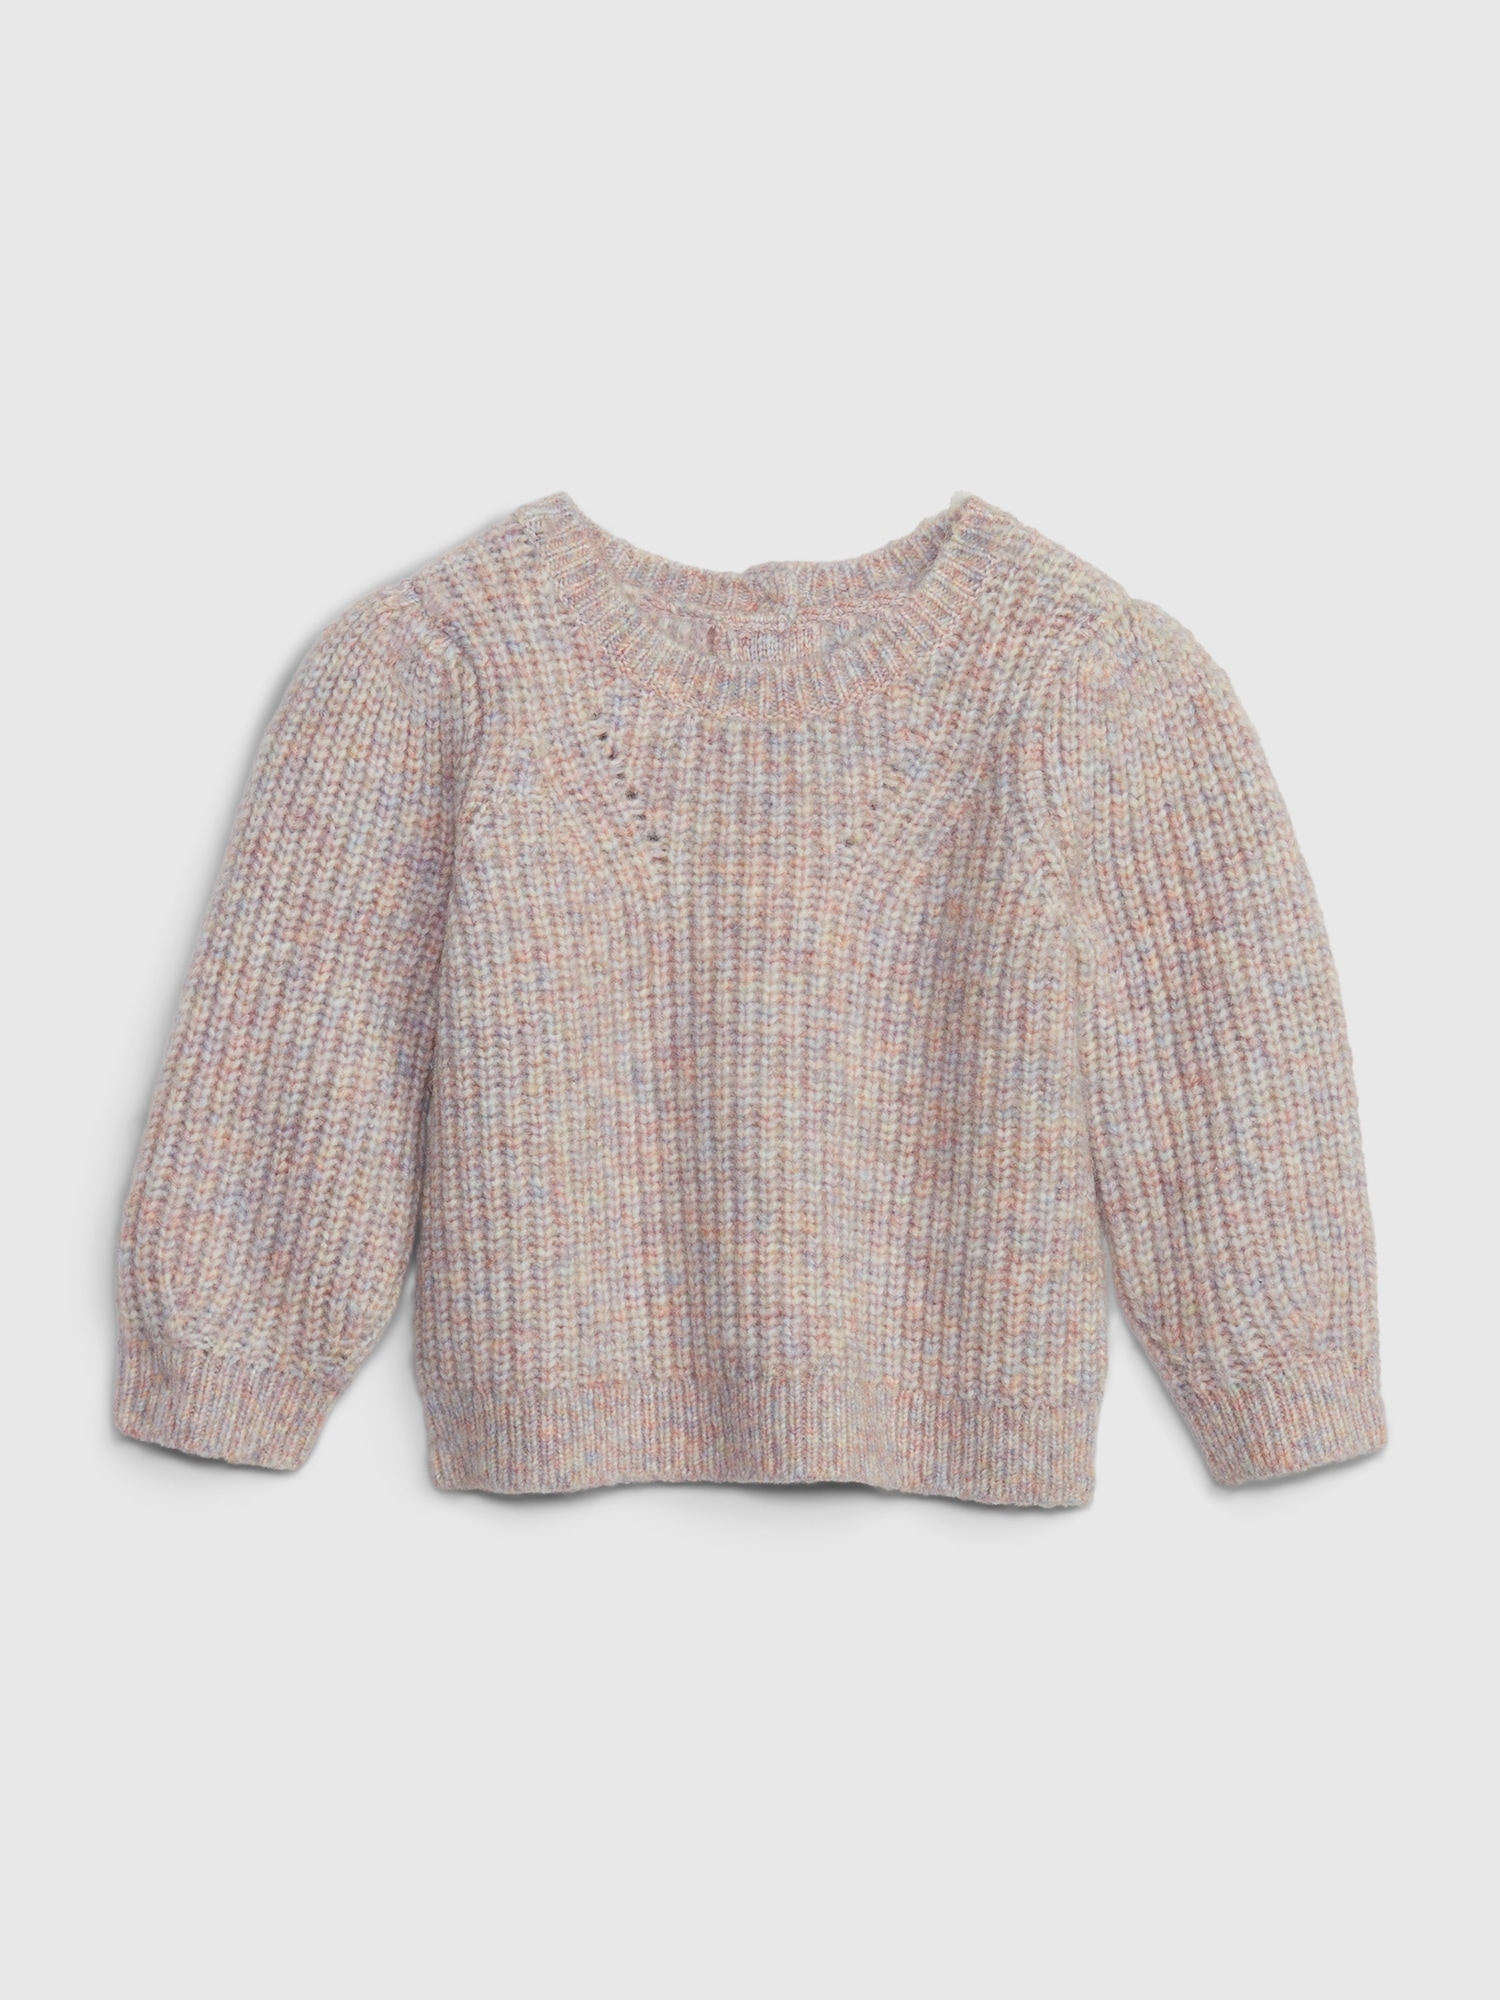 Gap Baby Shaker-Stitch Sweater